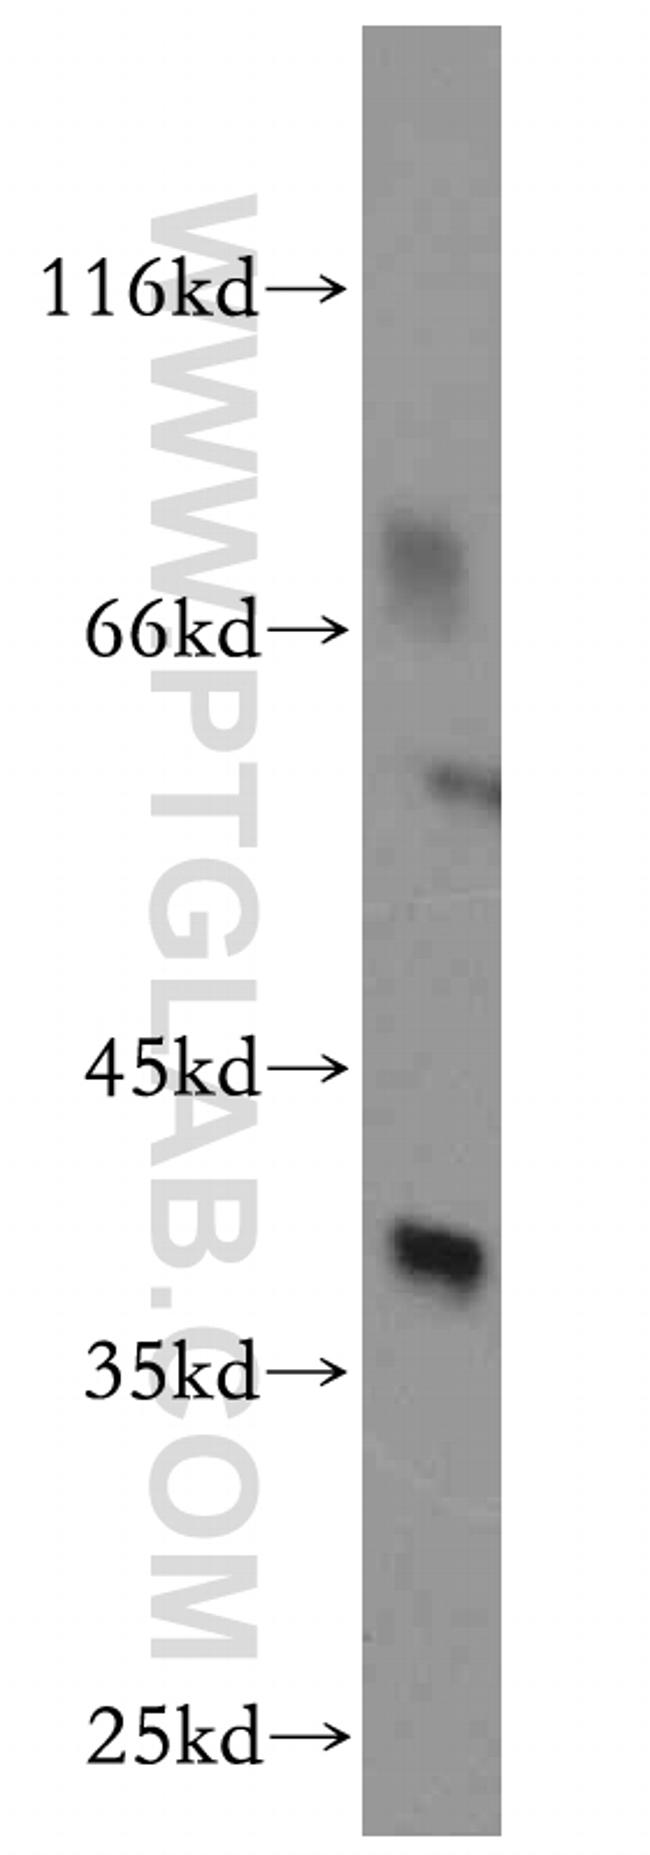 AKR1C4 Antibody in Western Blot (WB)